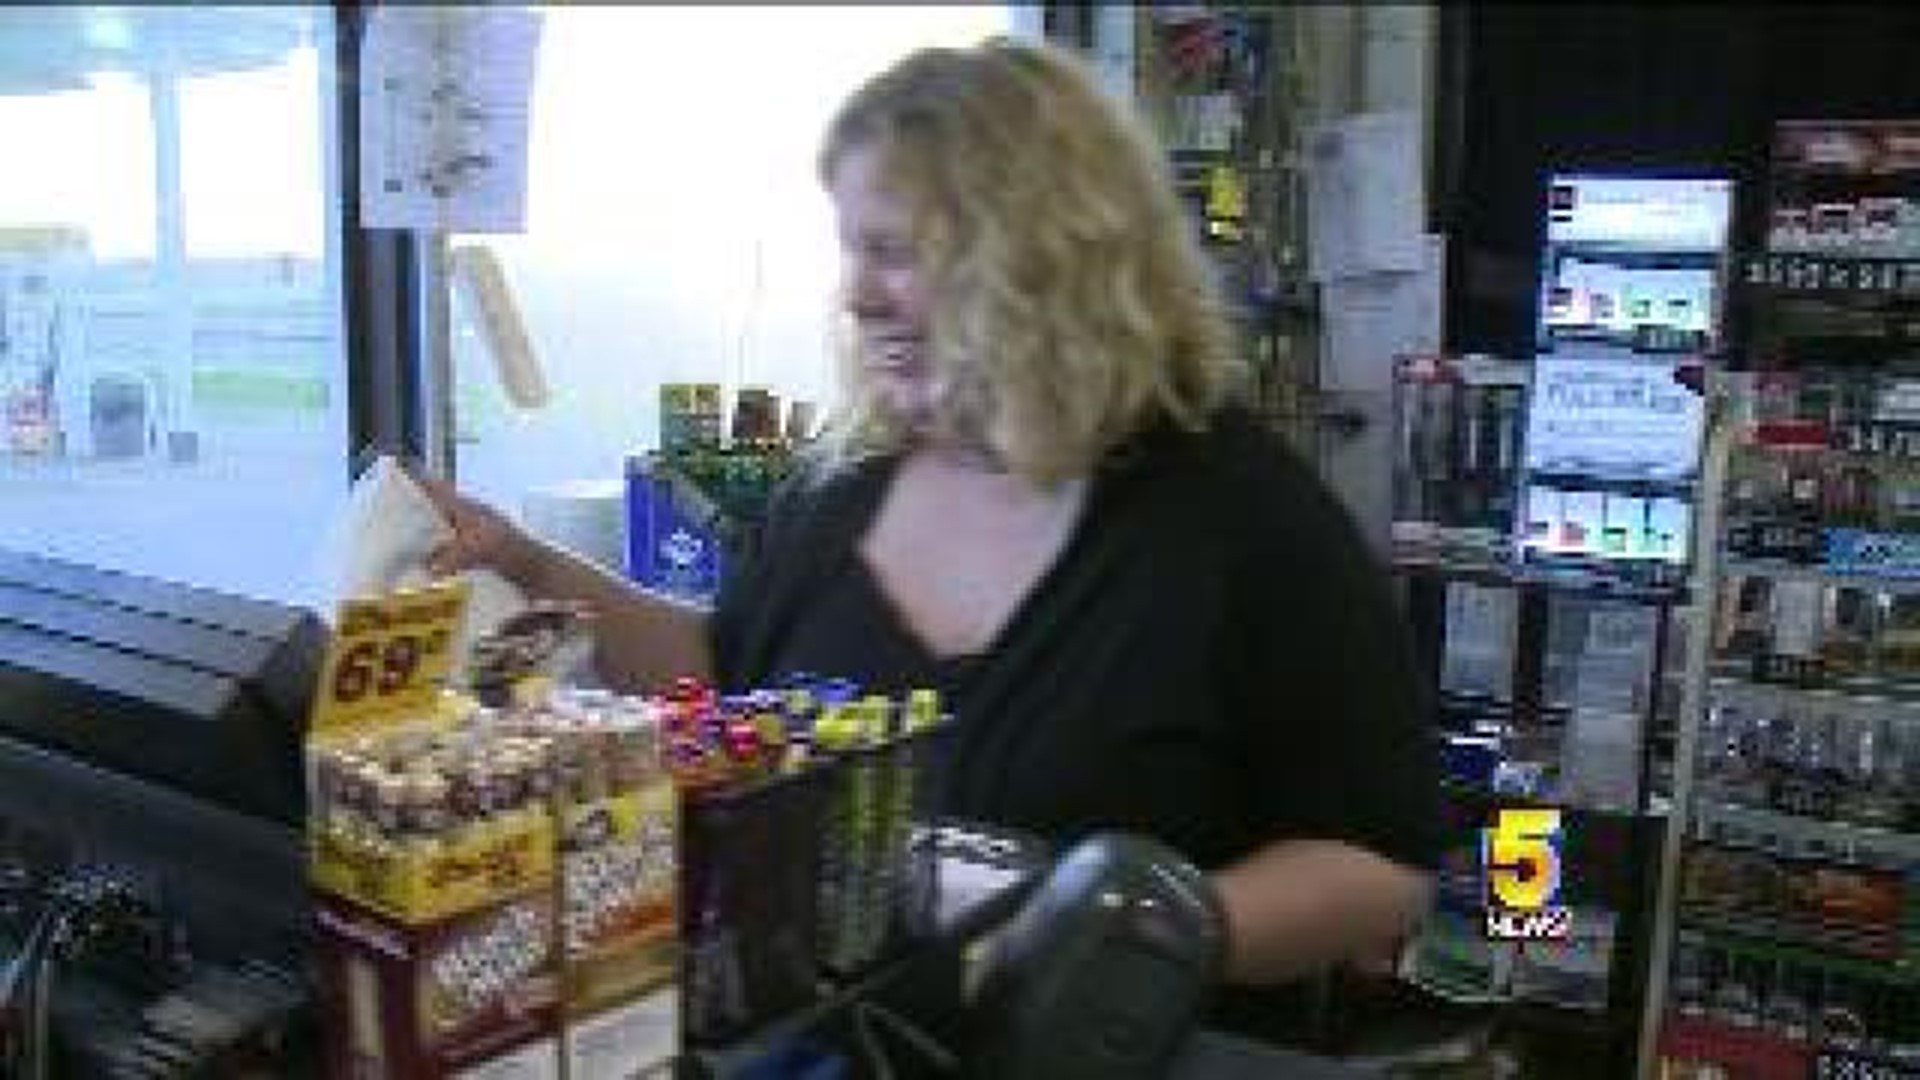 Store Clerk Describes Armed Robbery